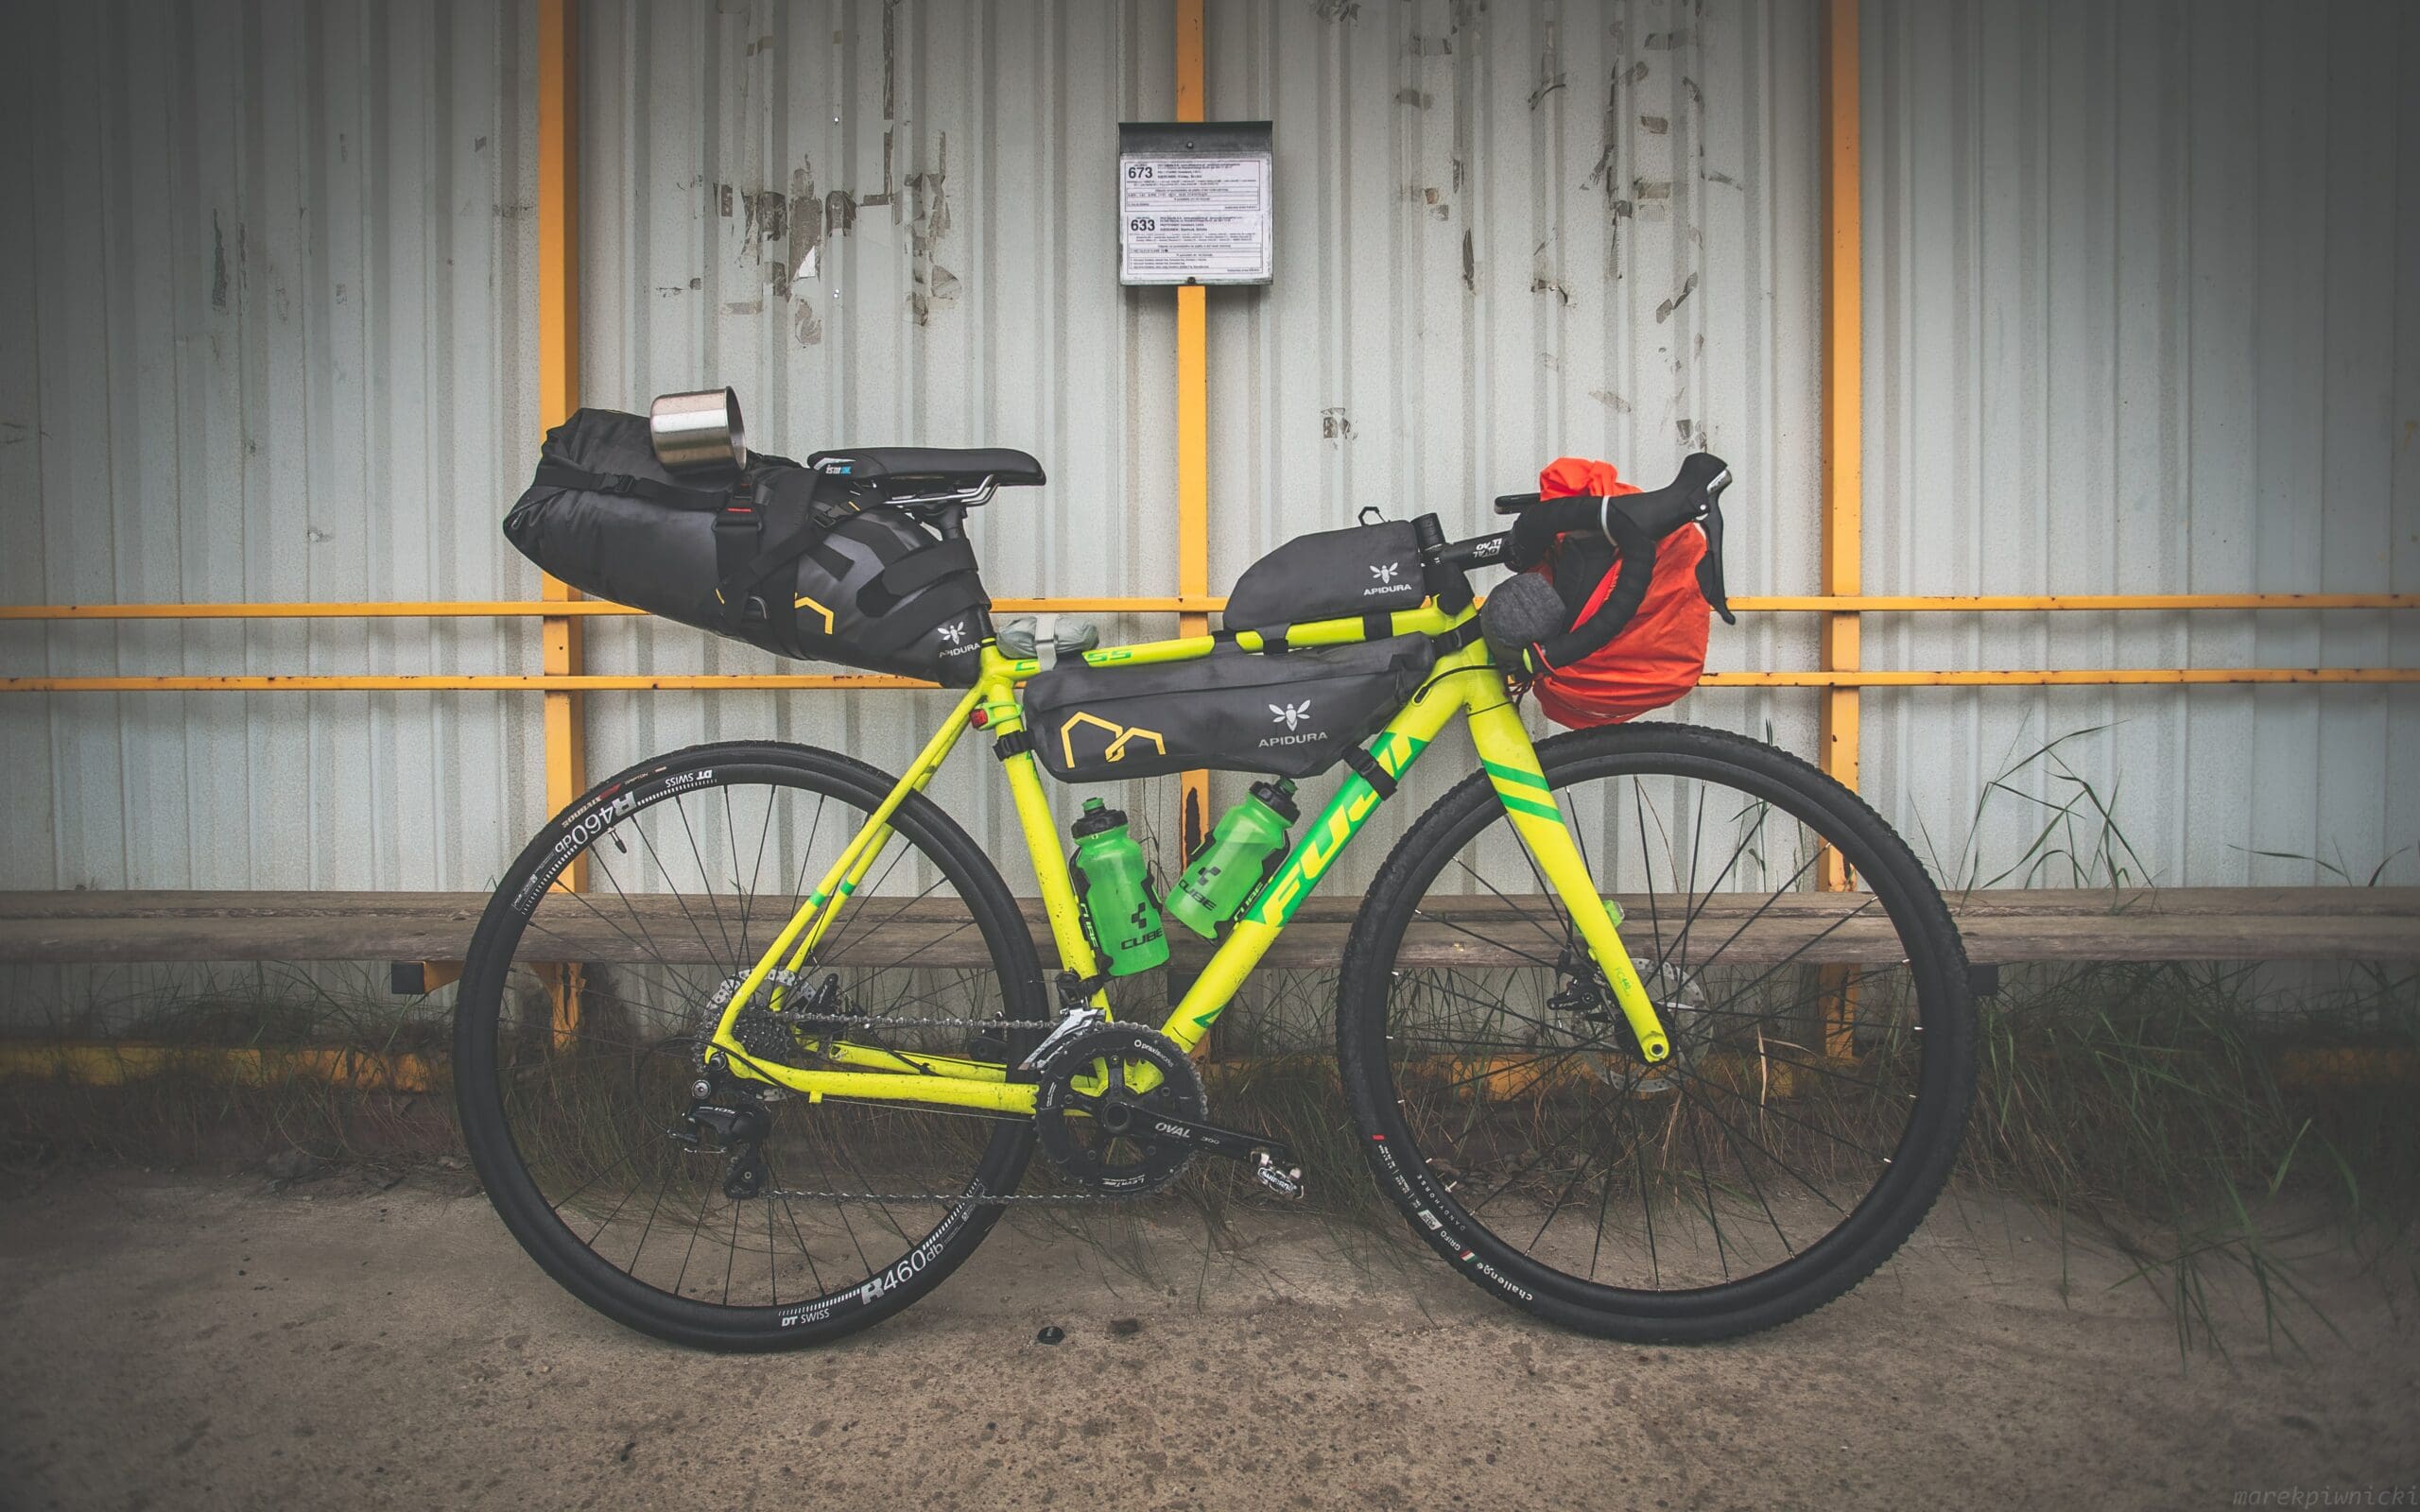 Bagagerie bikepacking WOHO, efficace et ultralight - Bike Café